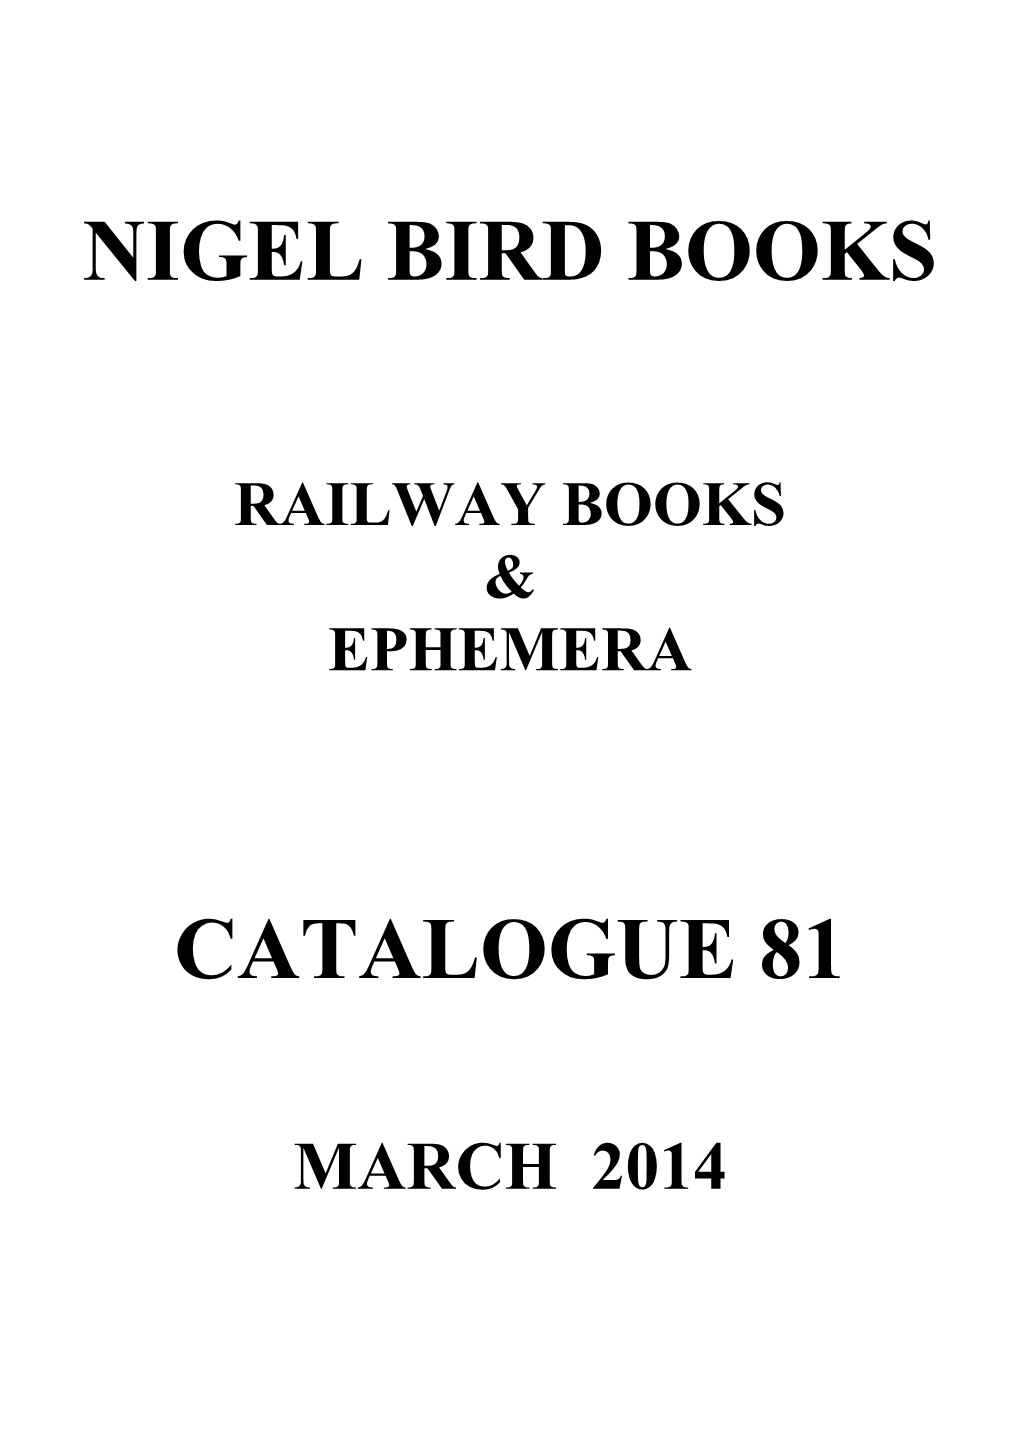 Nigel Bird Books